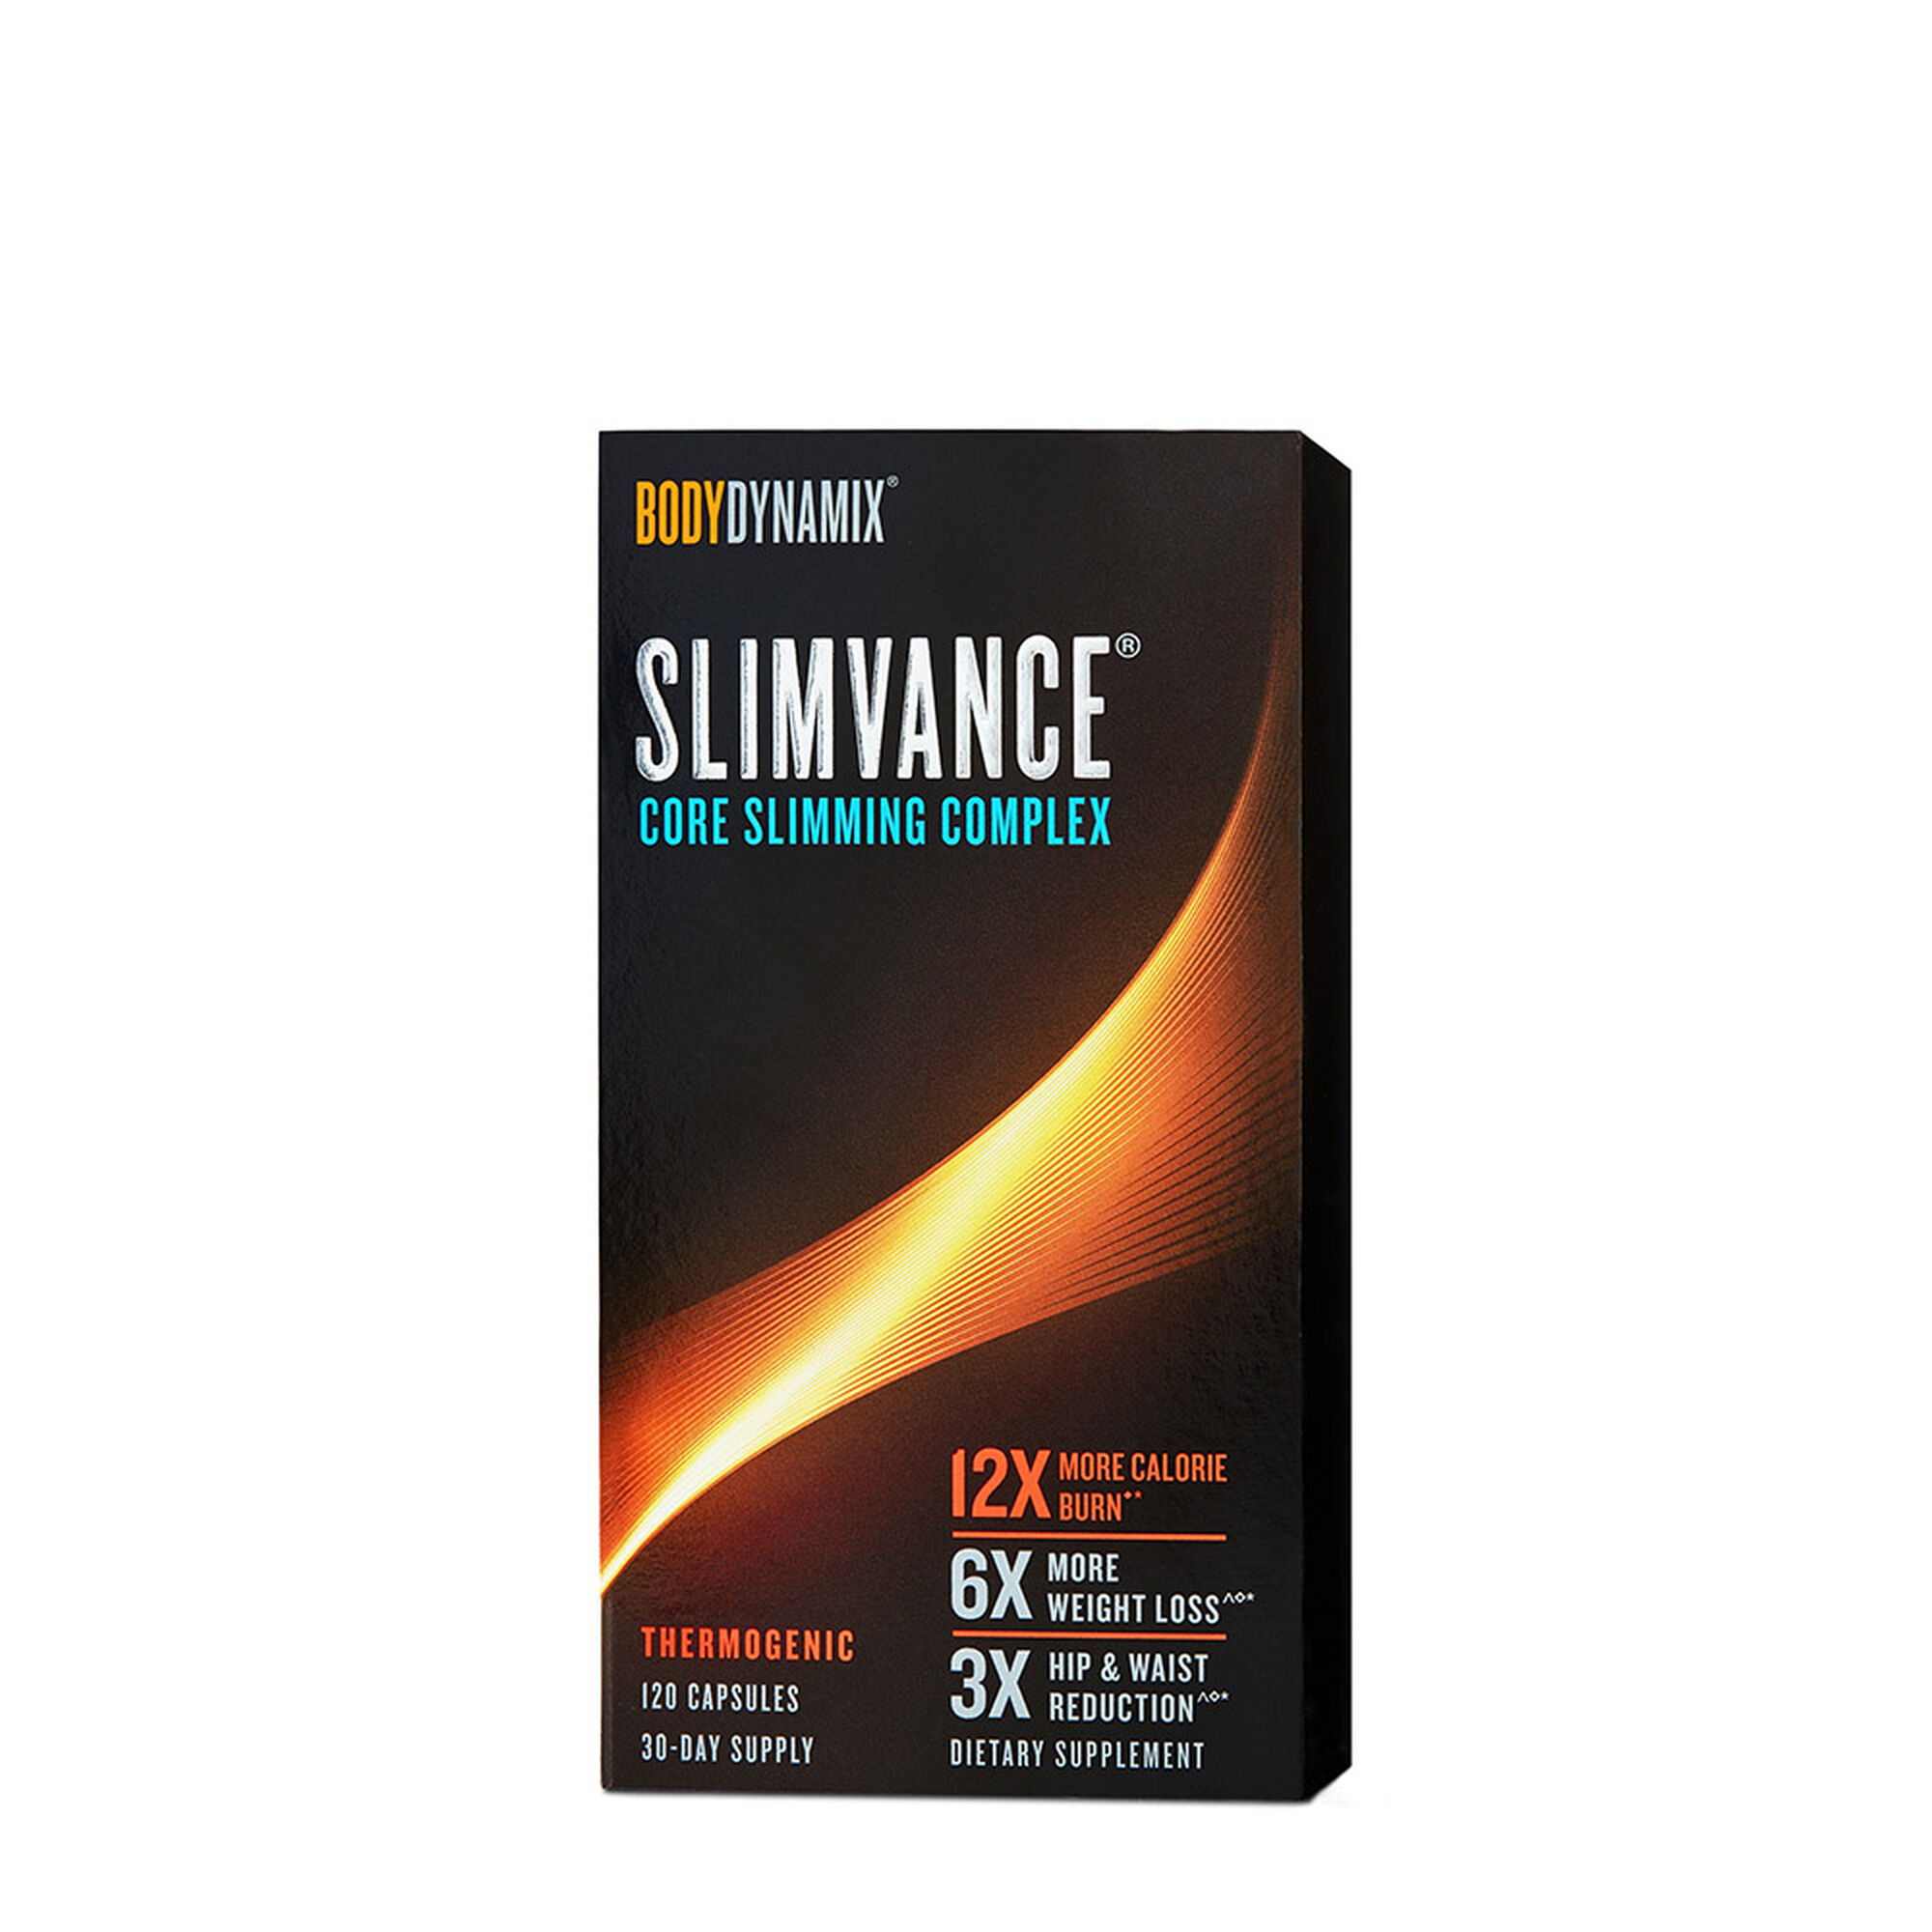 Bodydynamix slimvance core slimming 60cps GNC-BODSCS60CPS GN